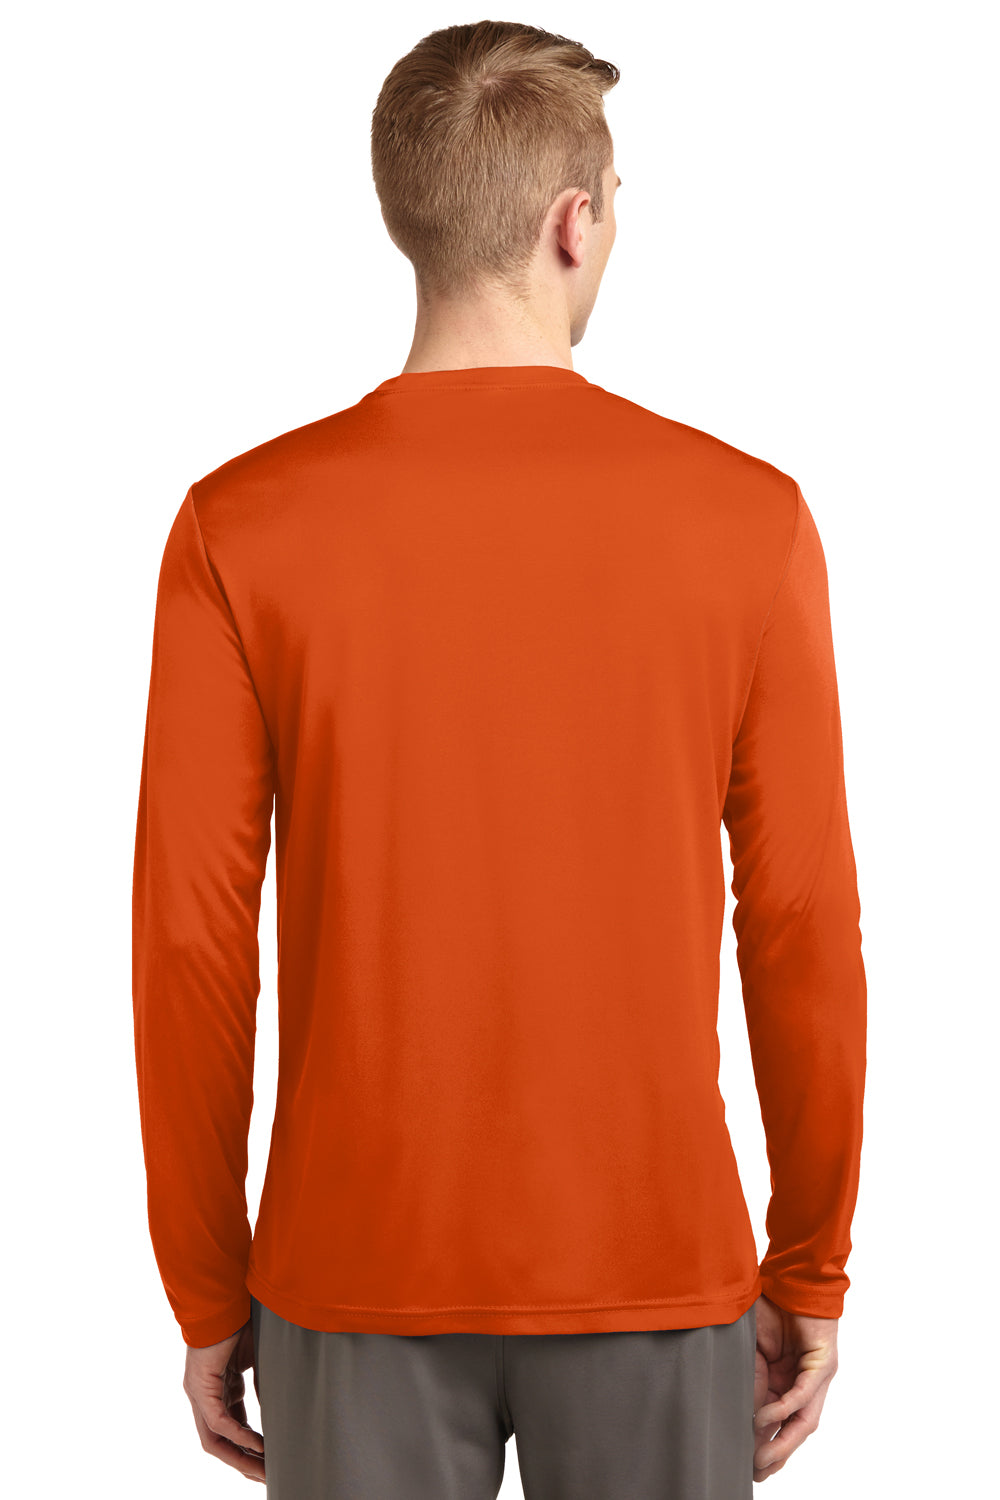 Sport-Tek ST350LS Mens Competitor Moisture Wicking Long Sleeve Crewneck T-Shirt Orange Back